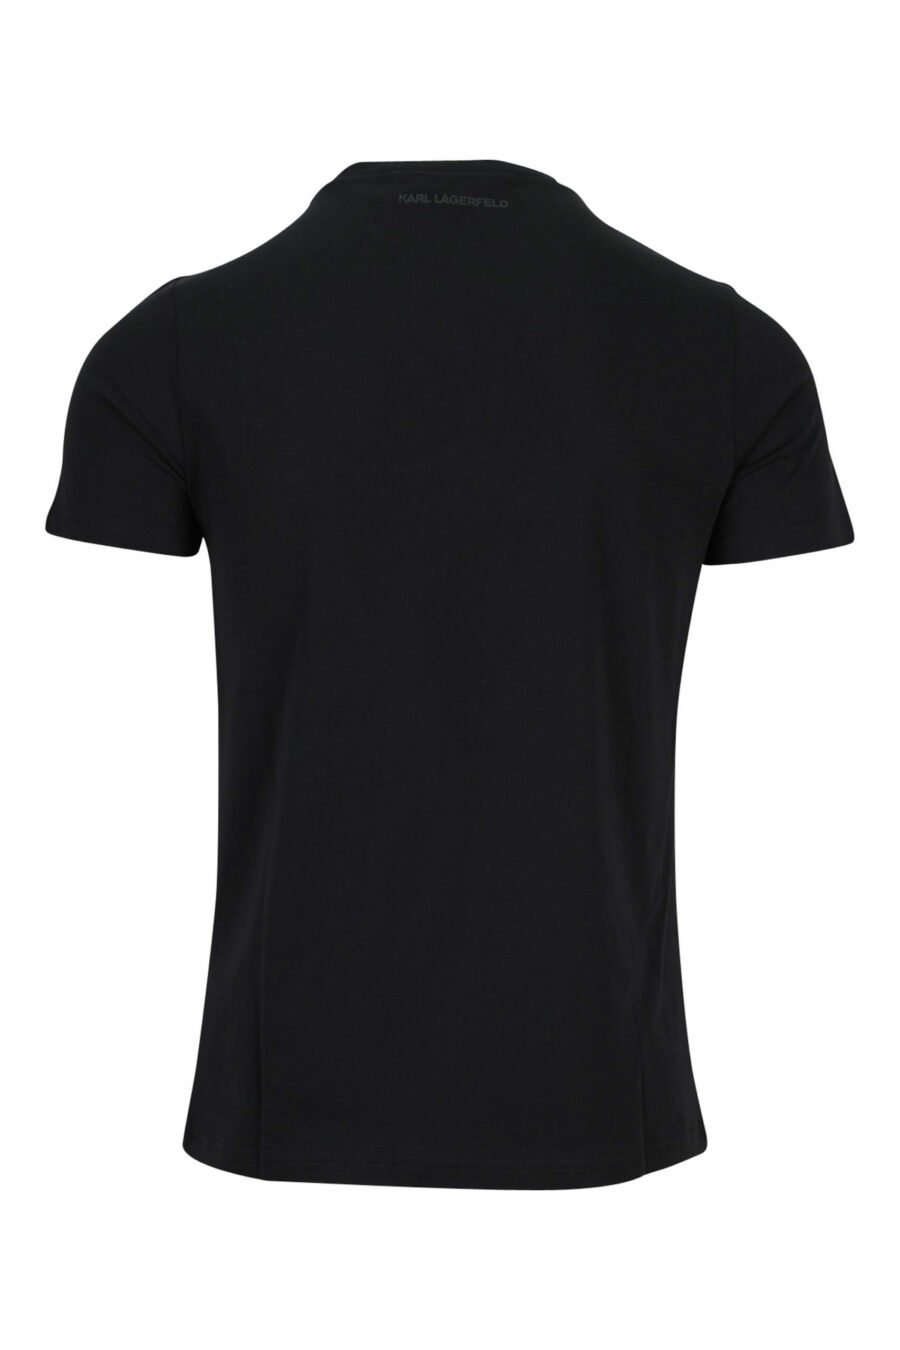 T-shirt noir à col rond avec maxilogo "karl" - 4062225535398 1 scaled